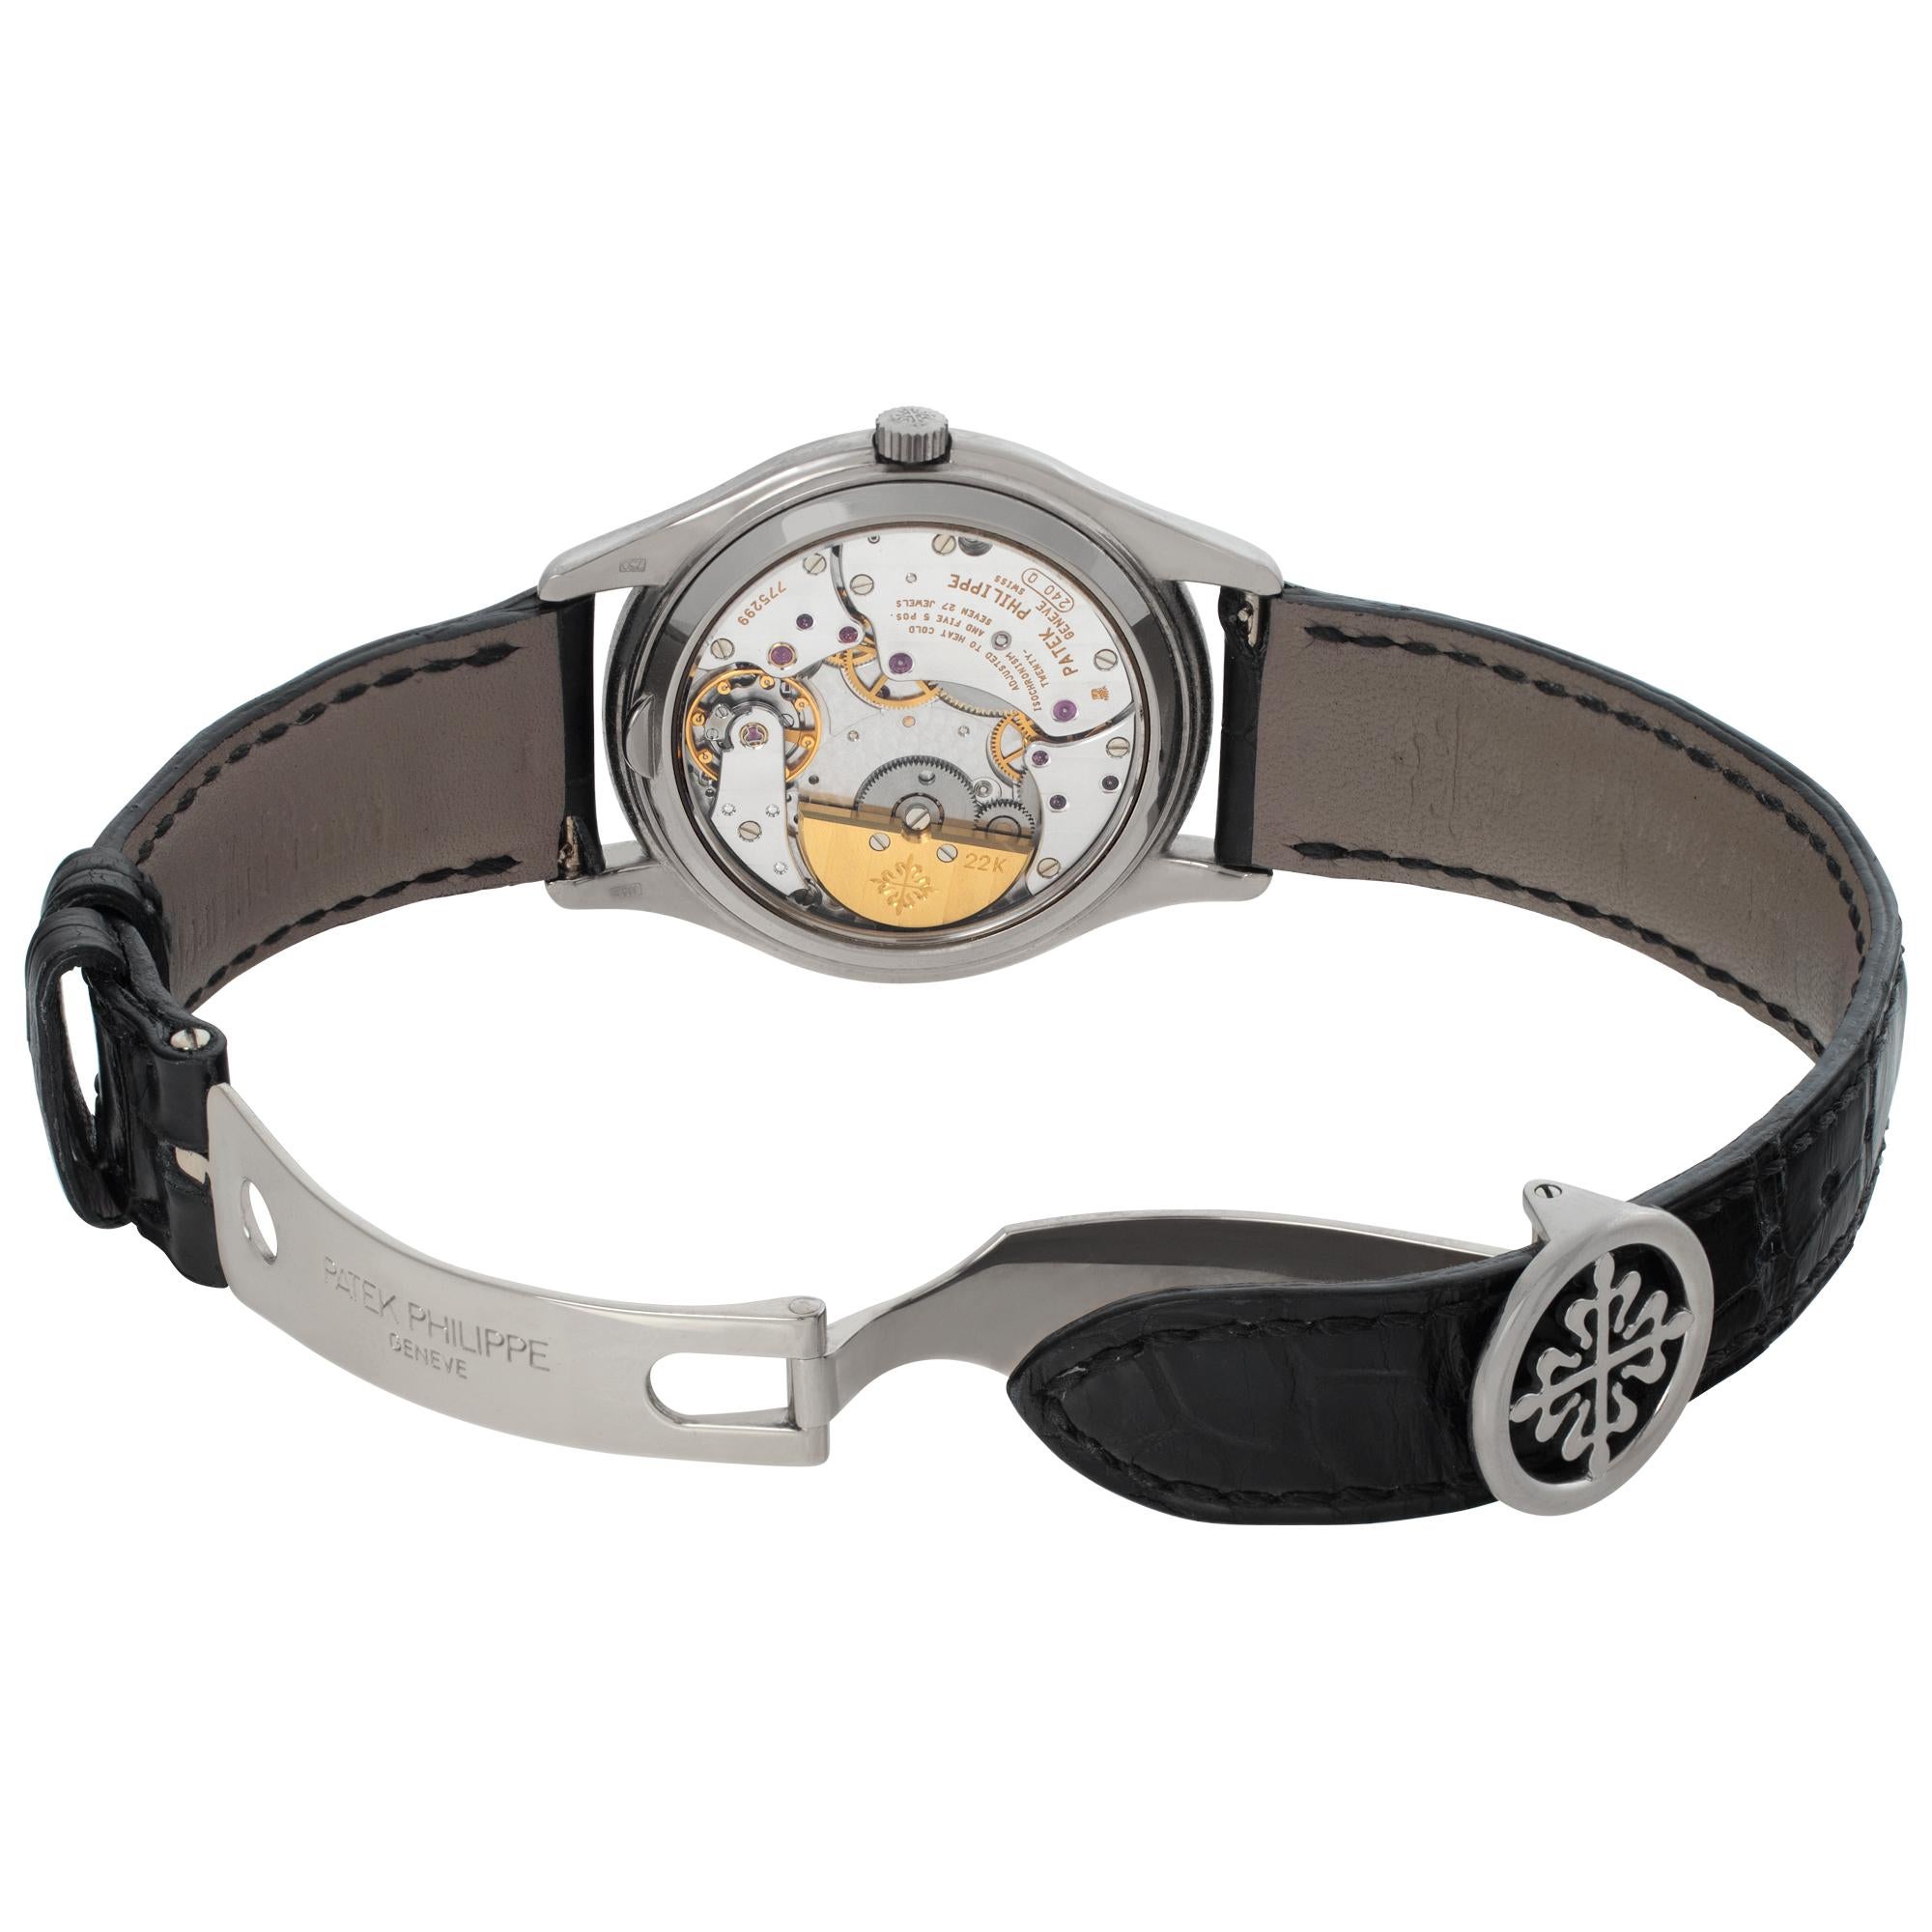 Men's Patek Philippe Perpetual Calendar 18k White Gold Wristwatch Ref 5038g